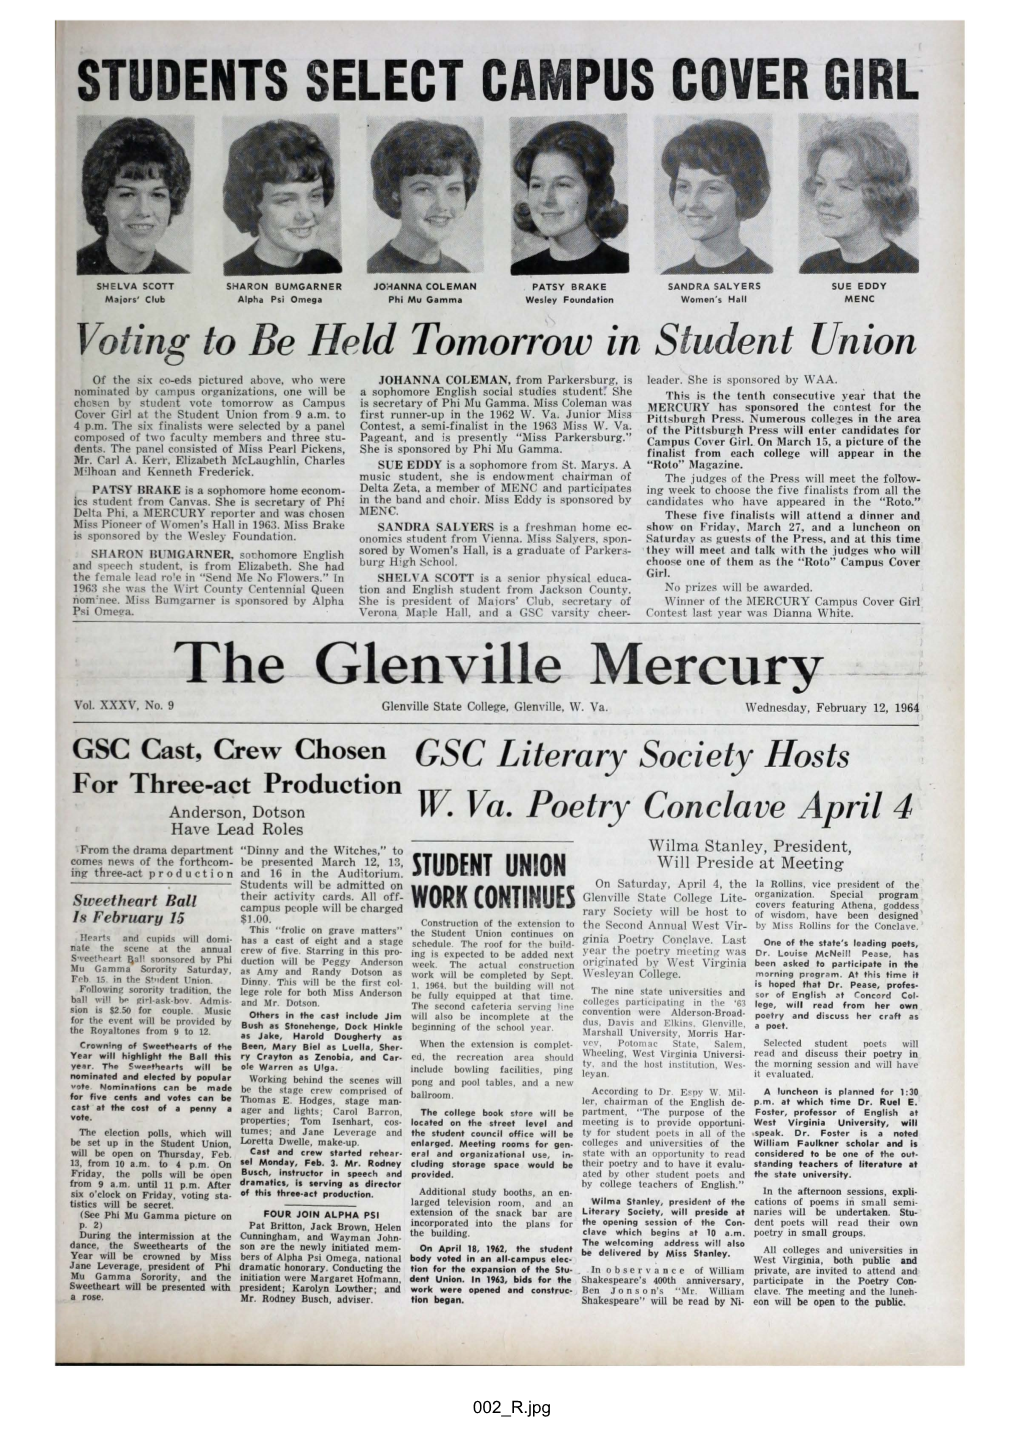 The Glenville Mercury Vol XXXV, No